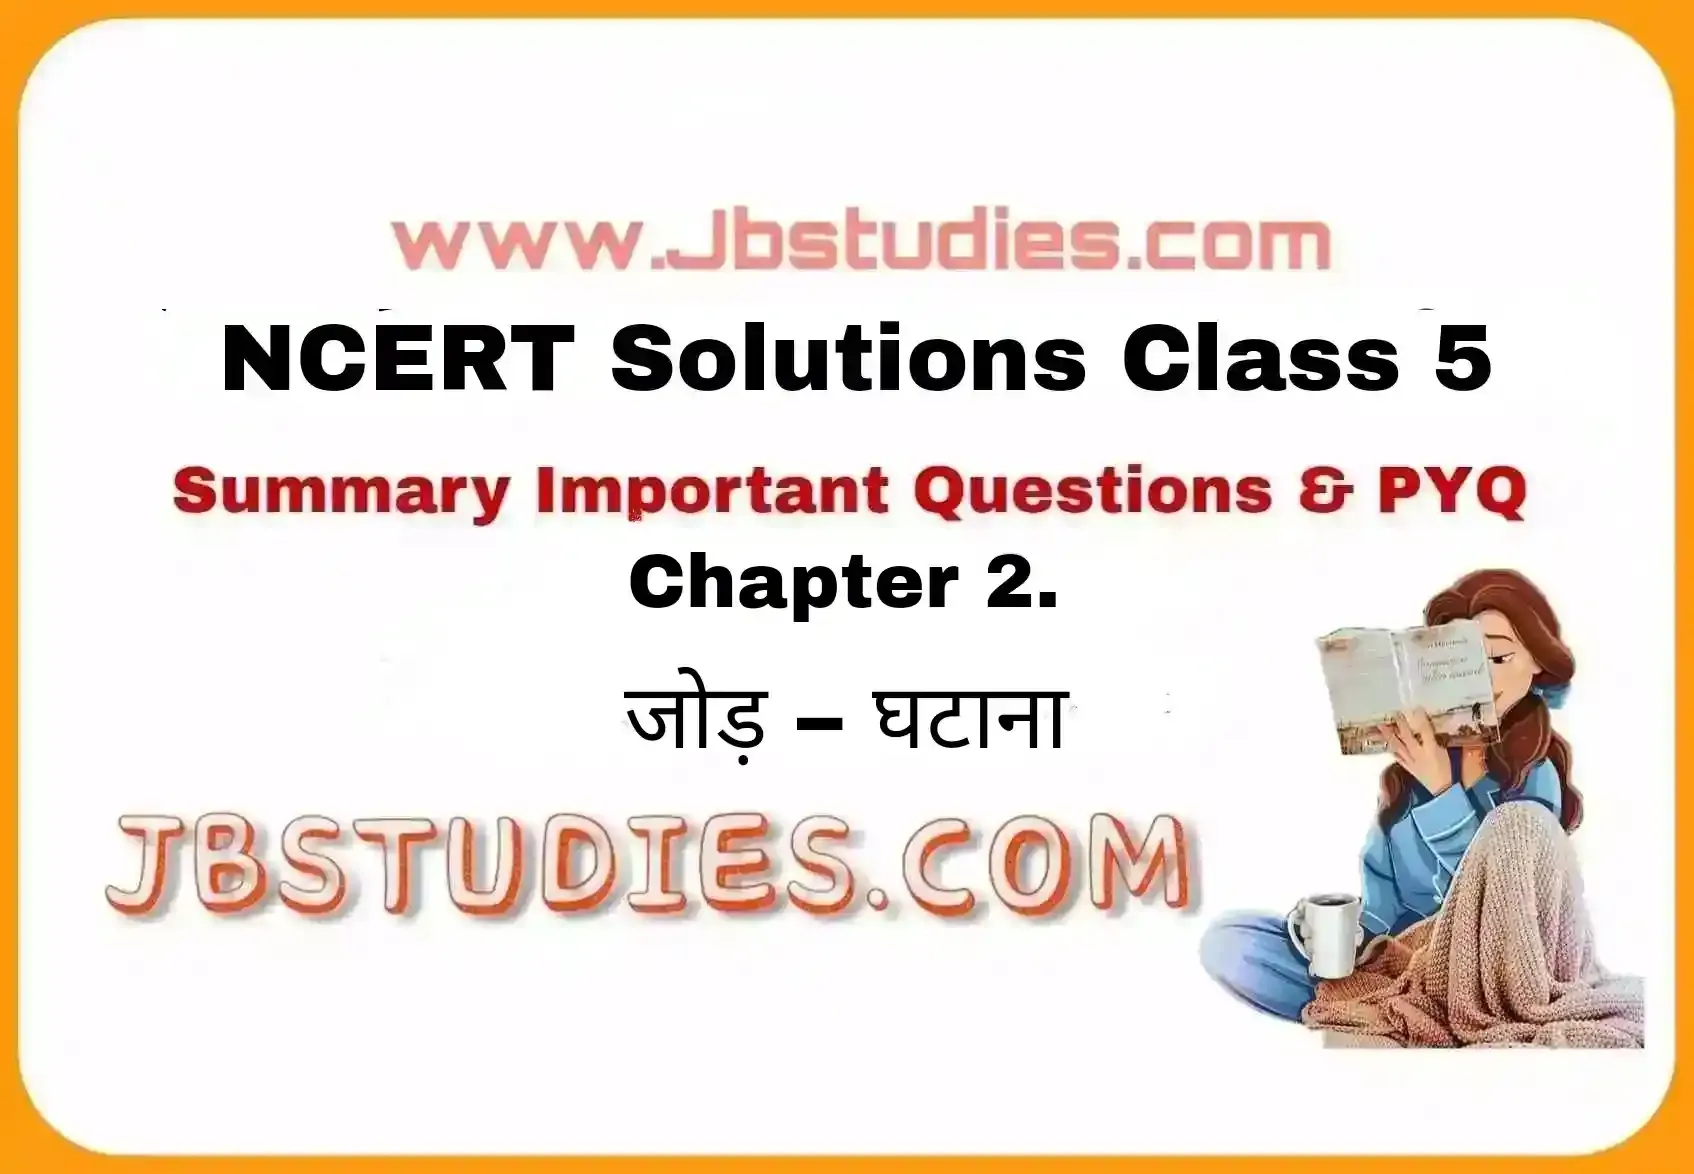 Solutions Class 5 गणित गिनतारा Chapter-2 (जोड़ – घटाना)